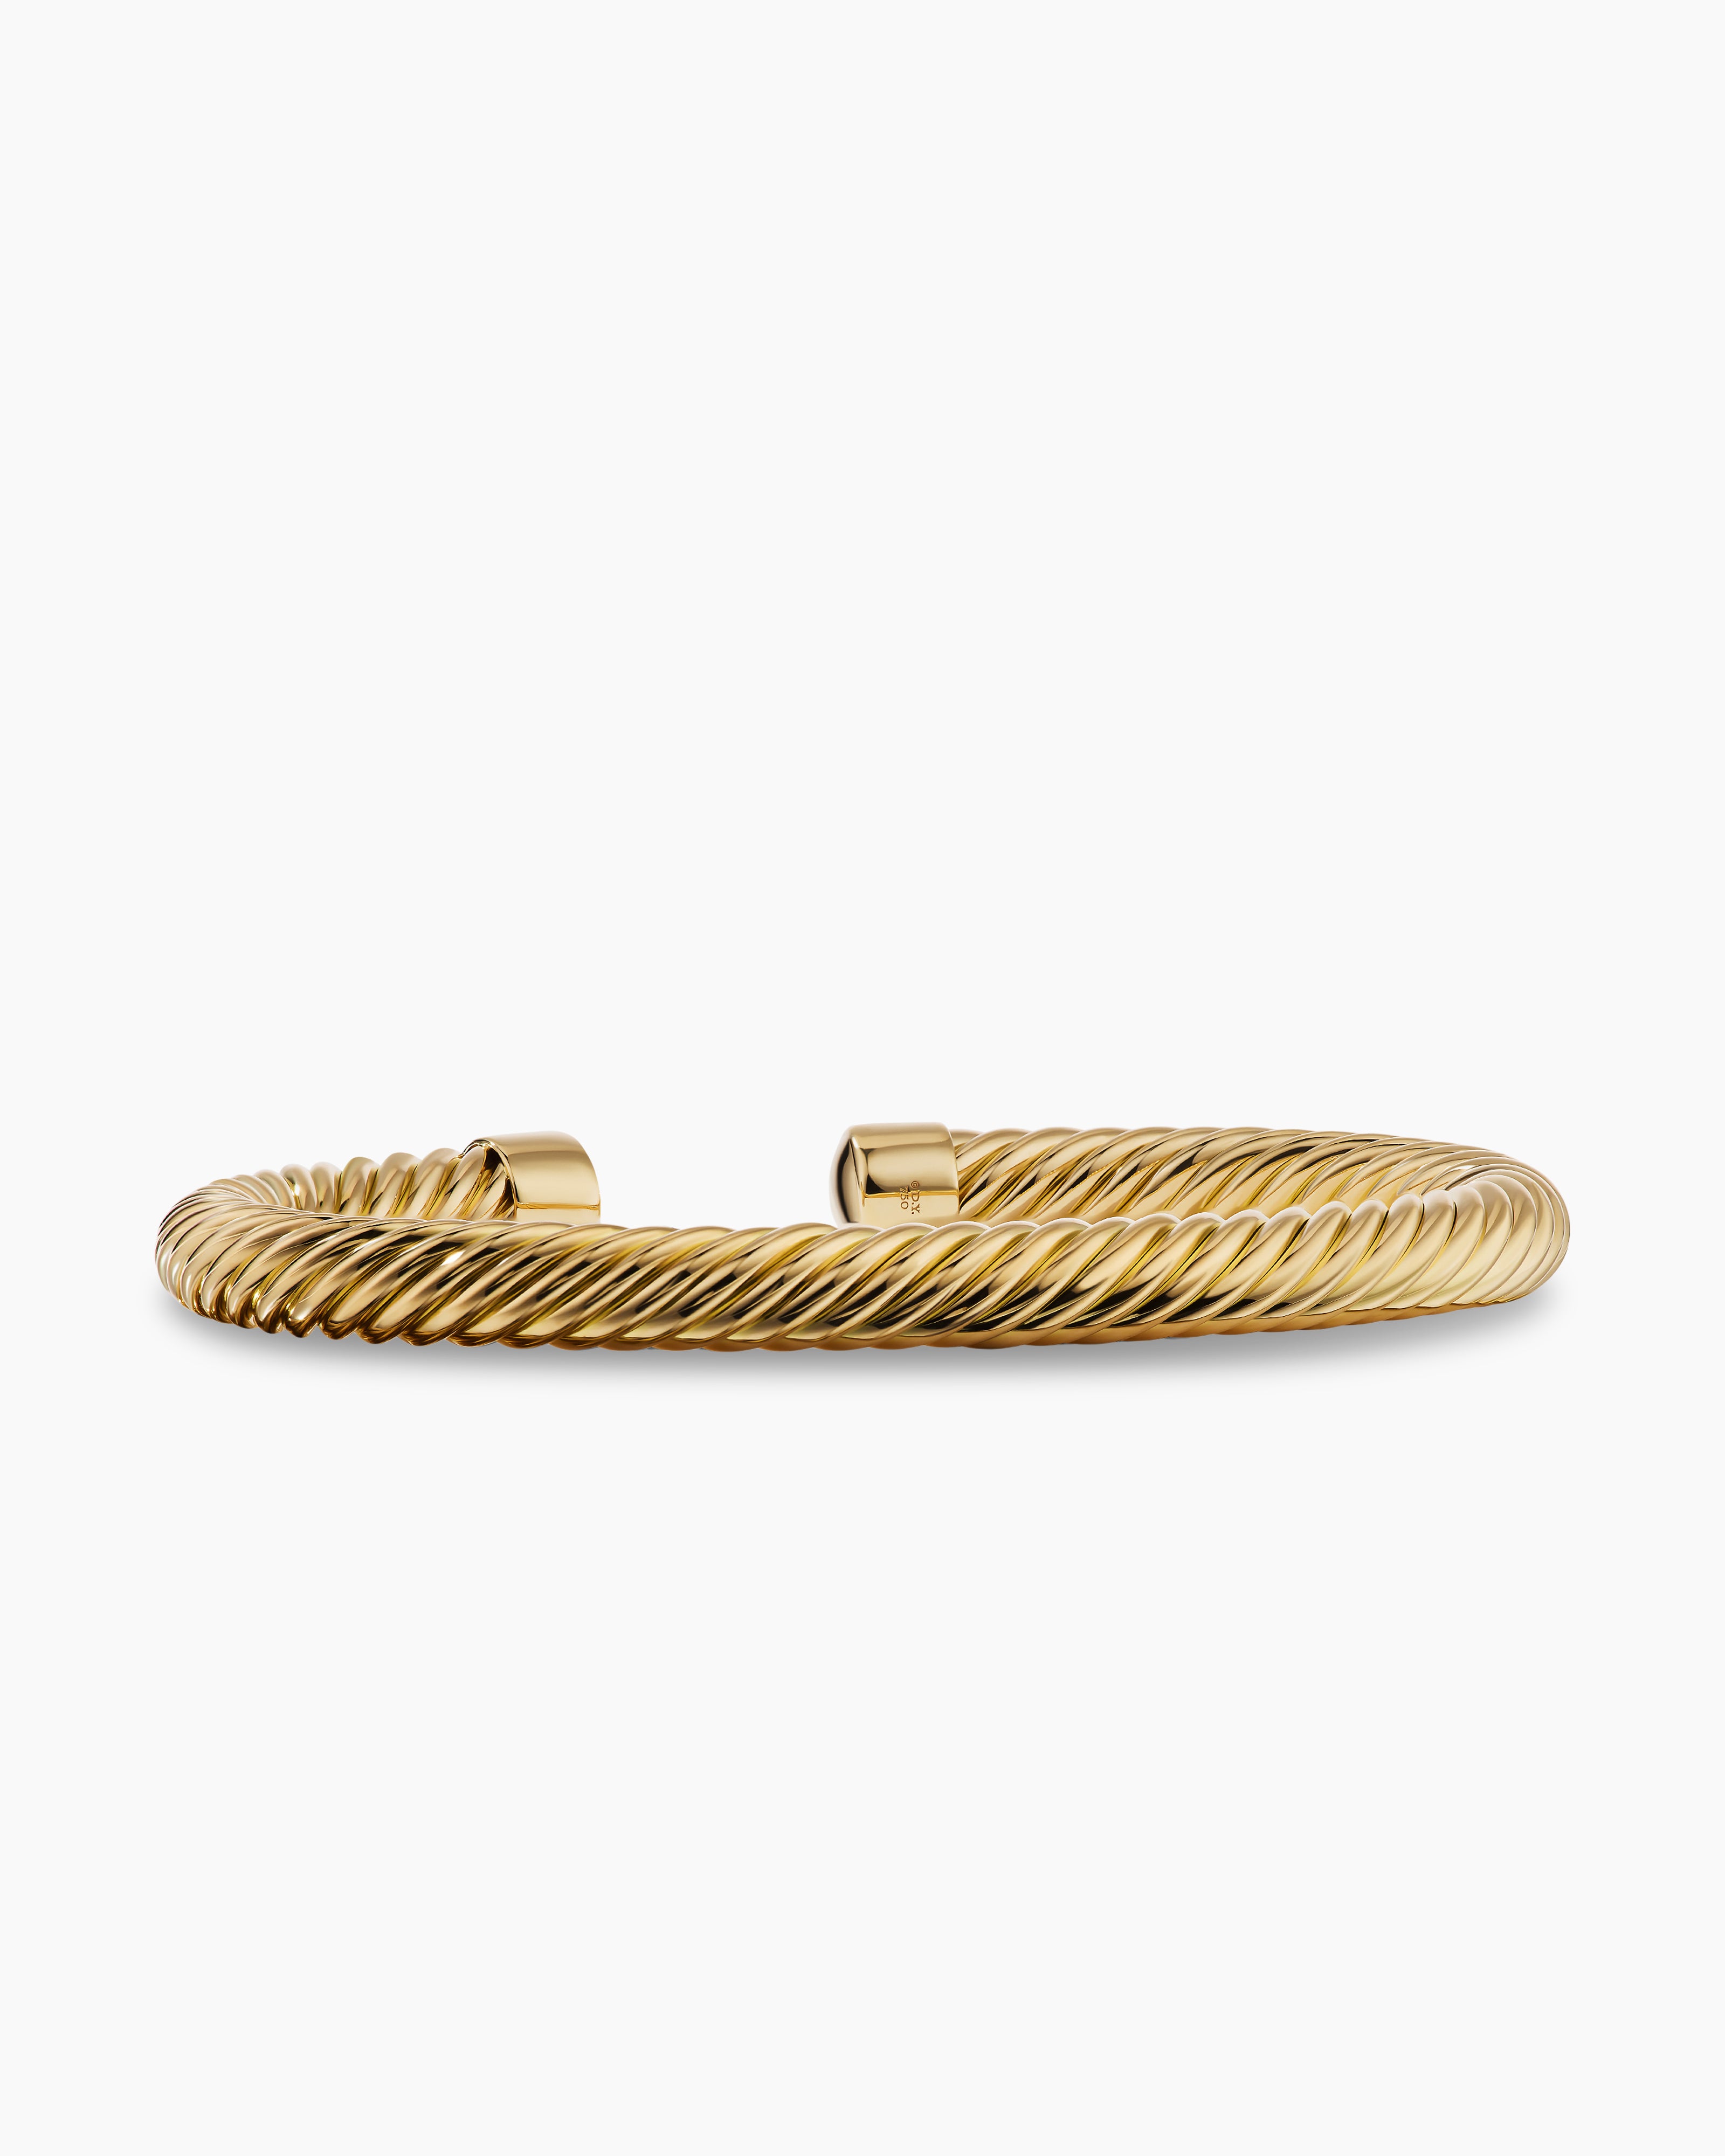 David Yurman Cable Bracelet in 18K Yellow Gold with Diamonds